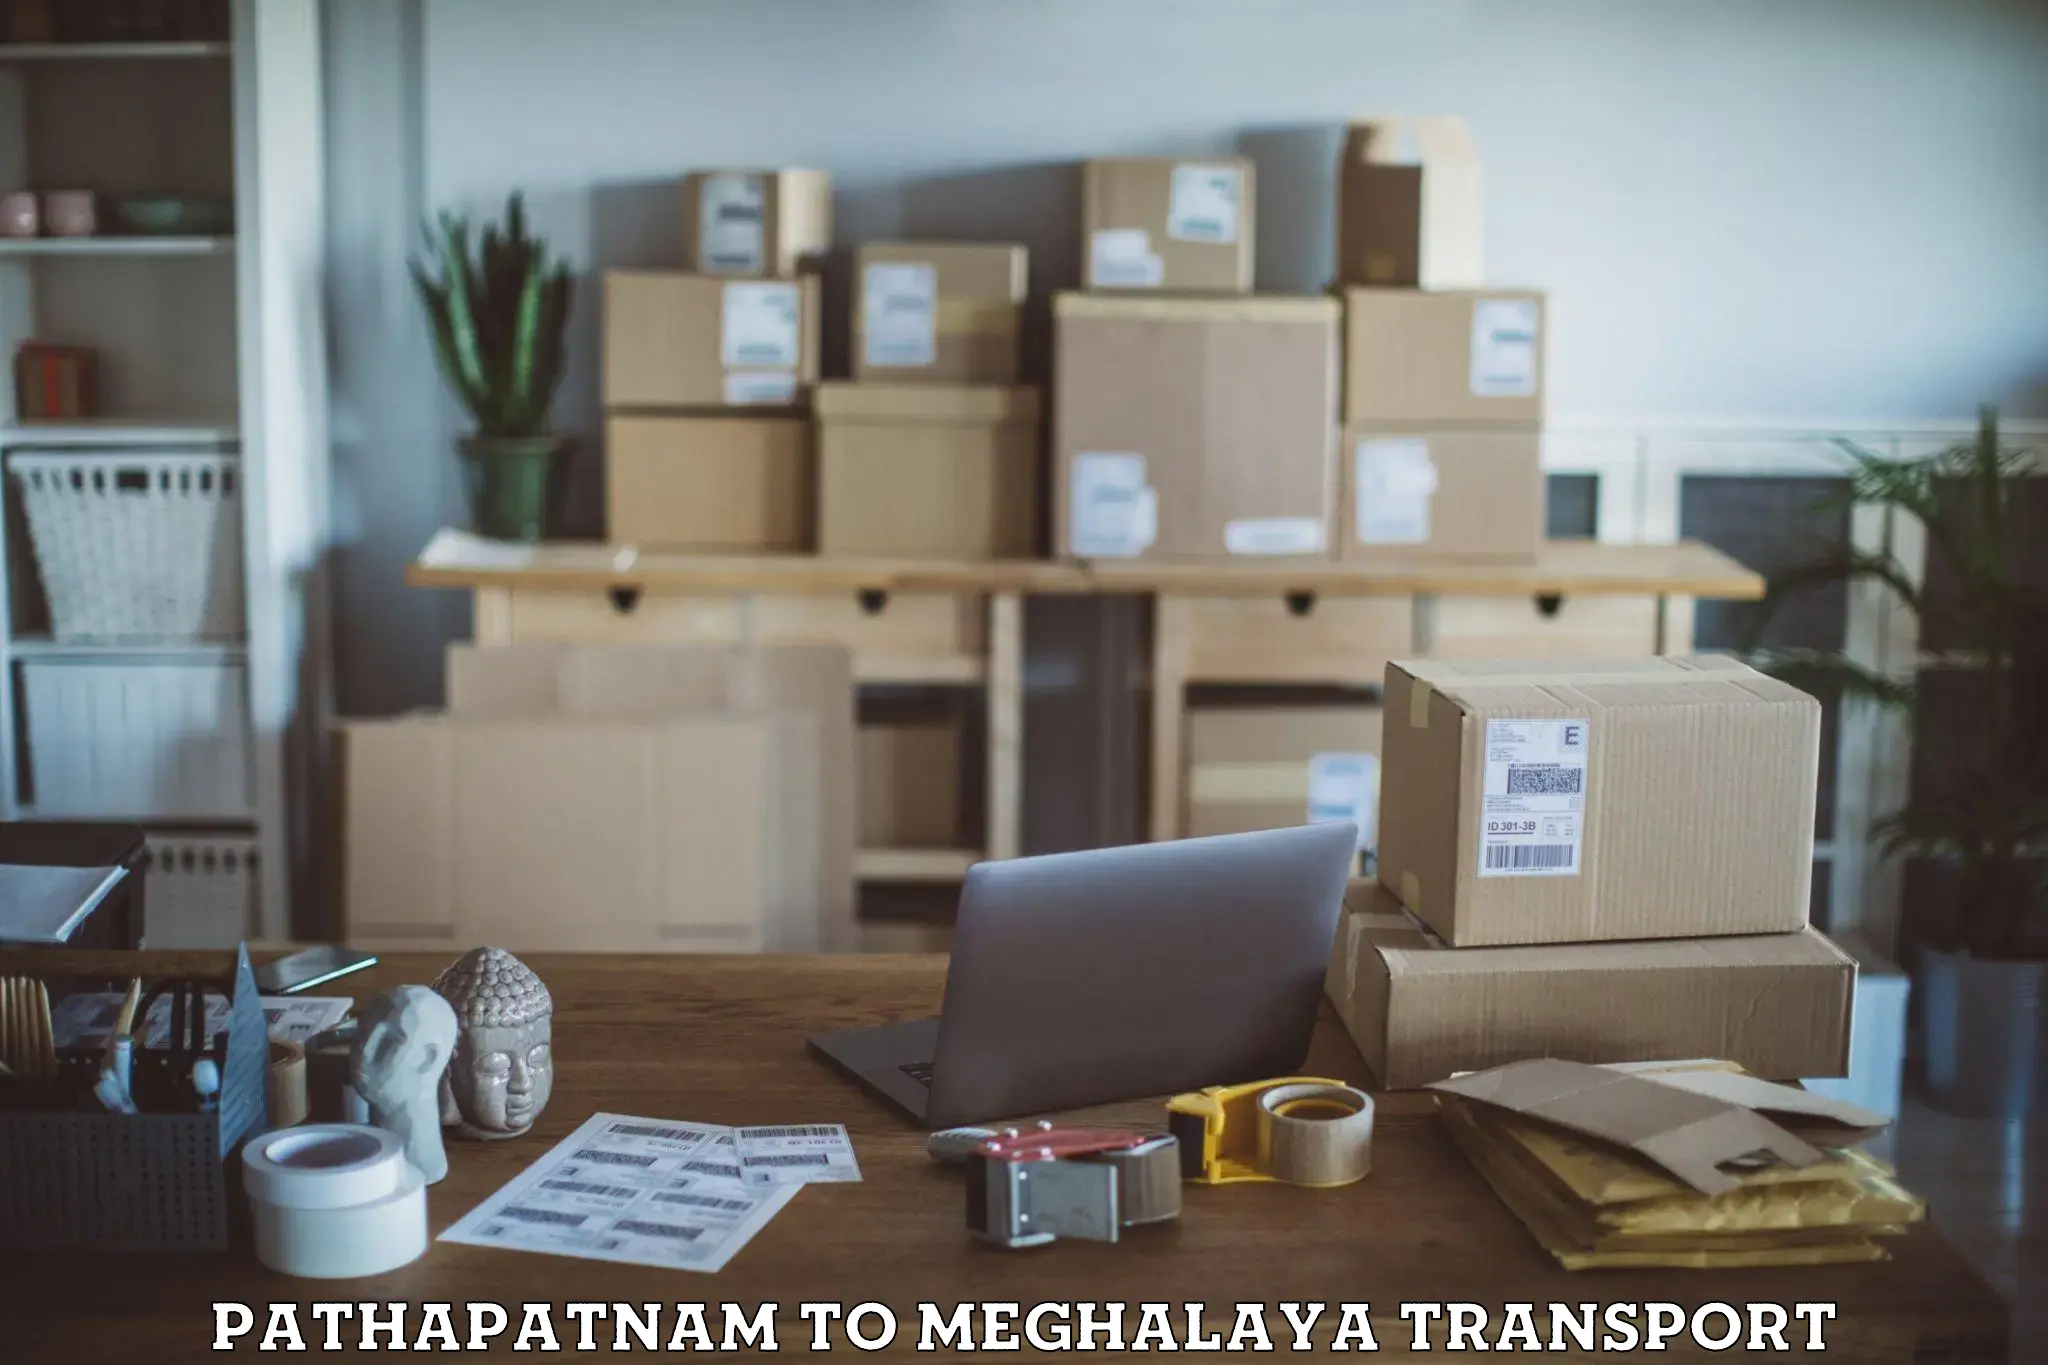 Sending bike to another city Pathapatnam to Meghalaya